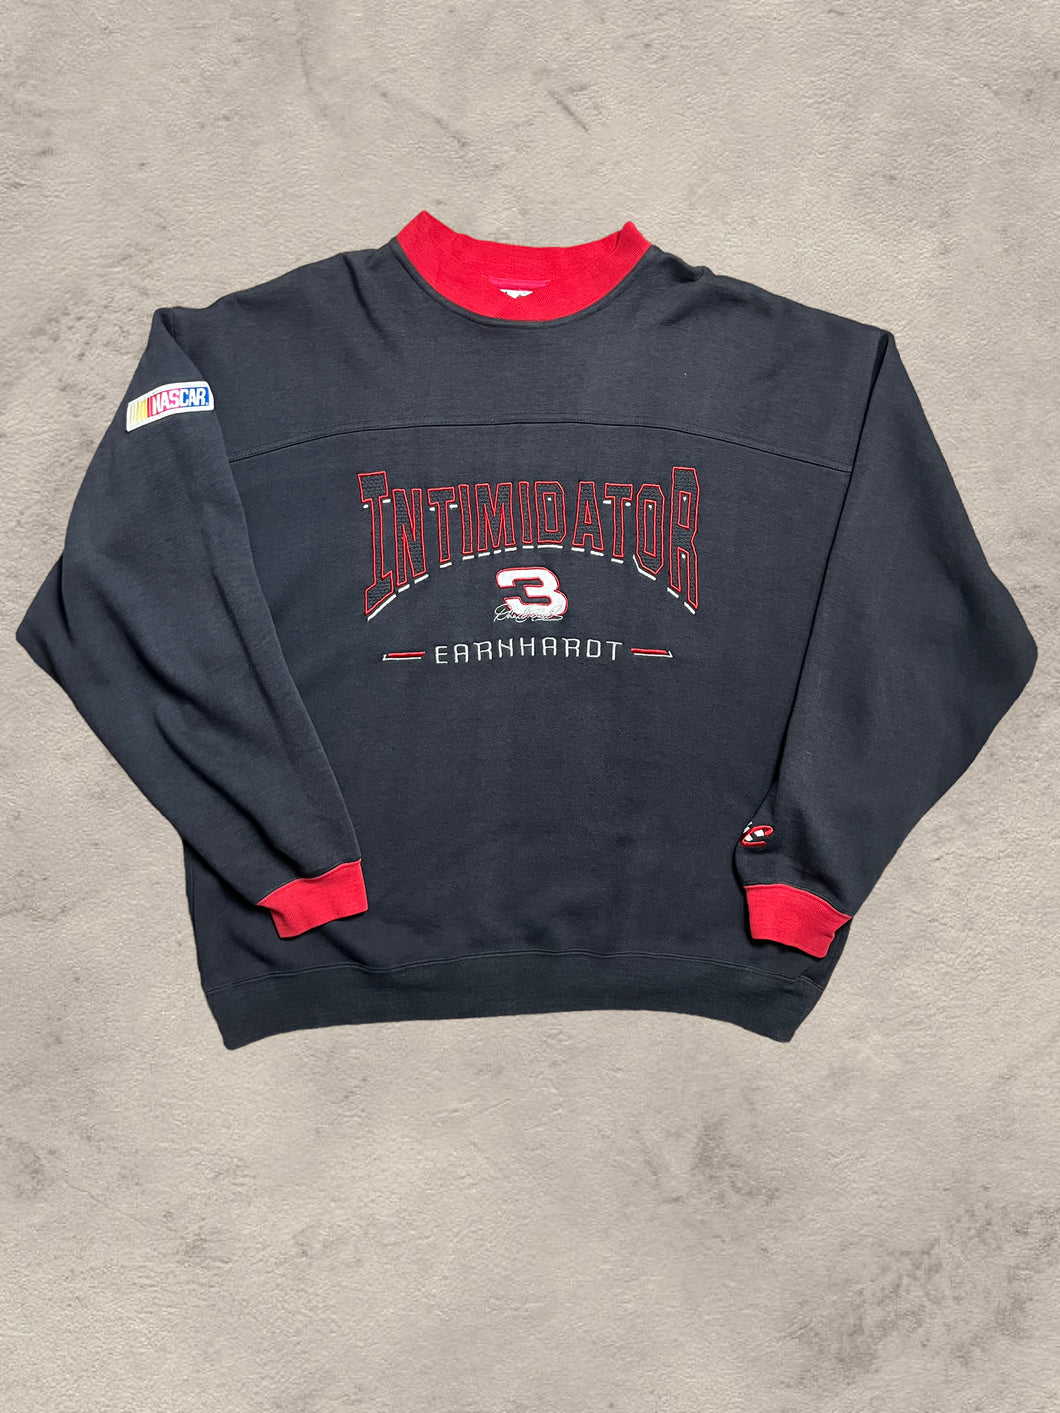 90's Starter NASCAR Racing Dale Earnhardt INTIMIDATOR Sweatshirt - XL